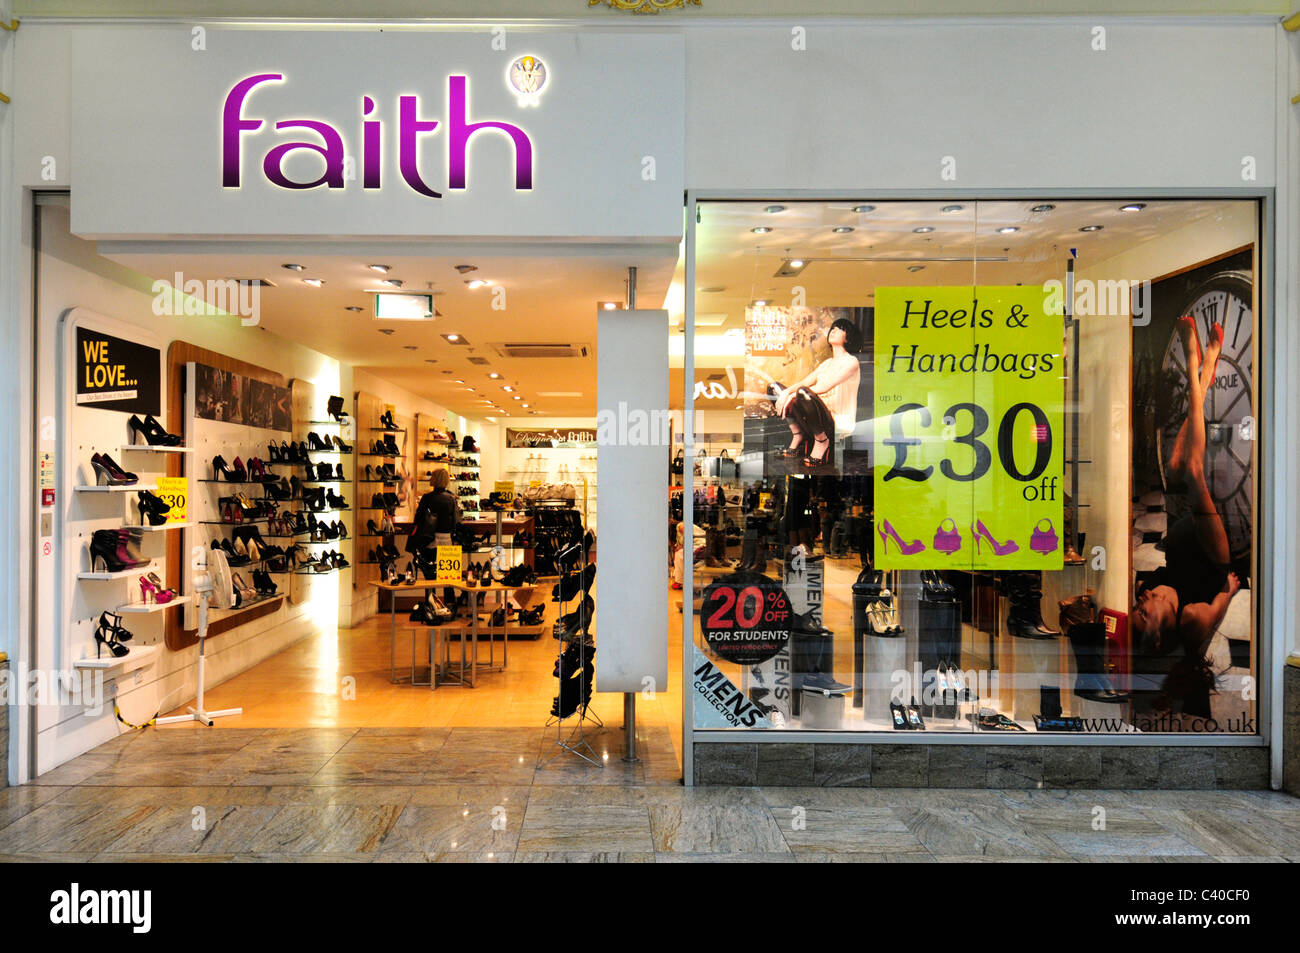 faith shoe shop